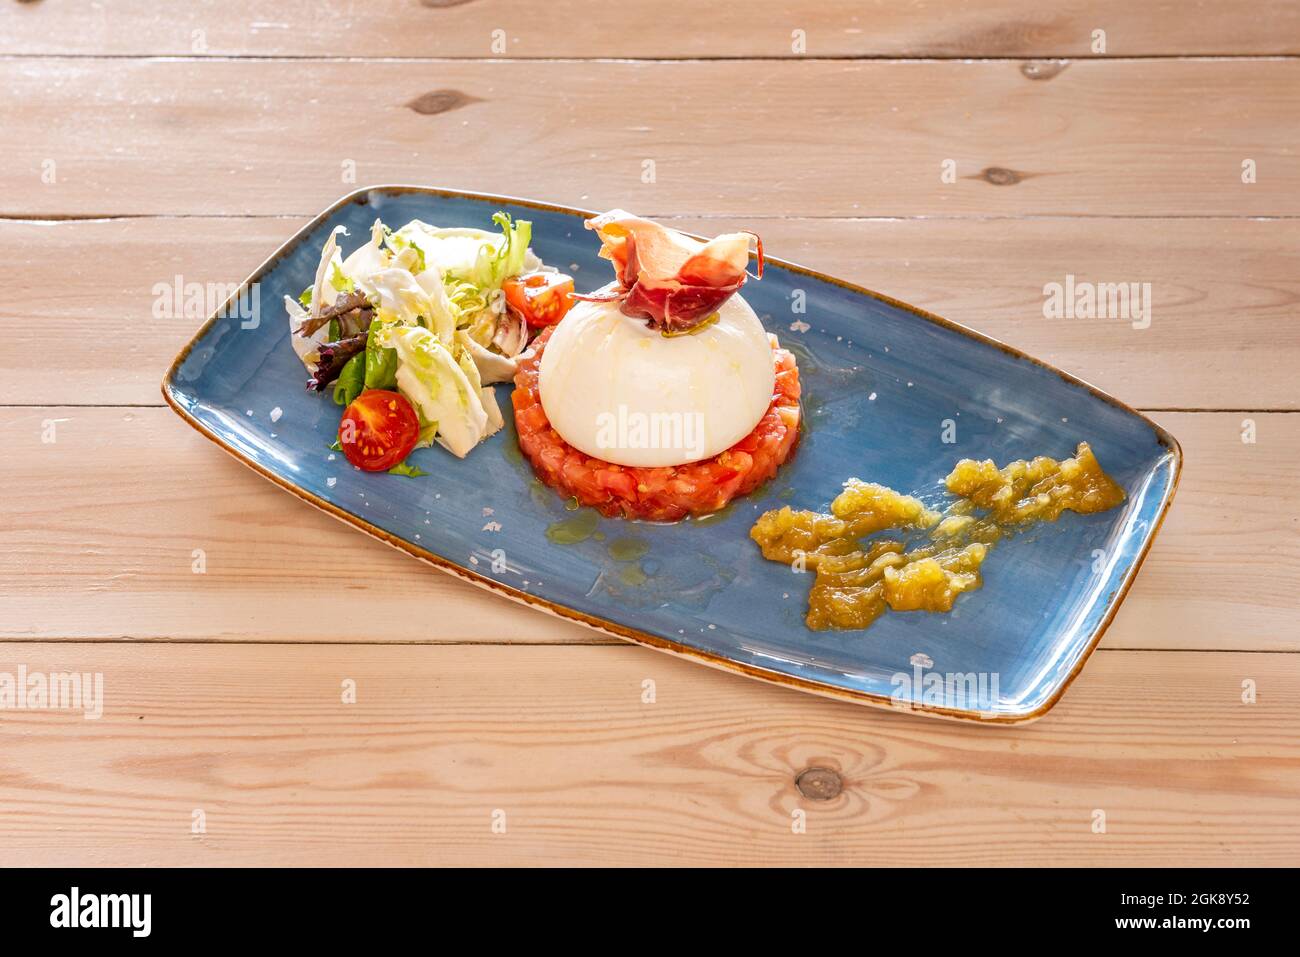 Burrata cheese mounted on tomato tartare, a little Serrano ham and green salad on a blue tray Stock Photo